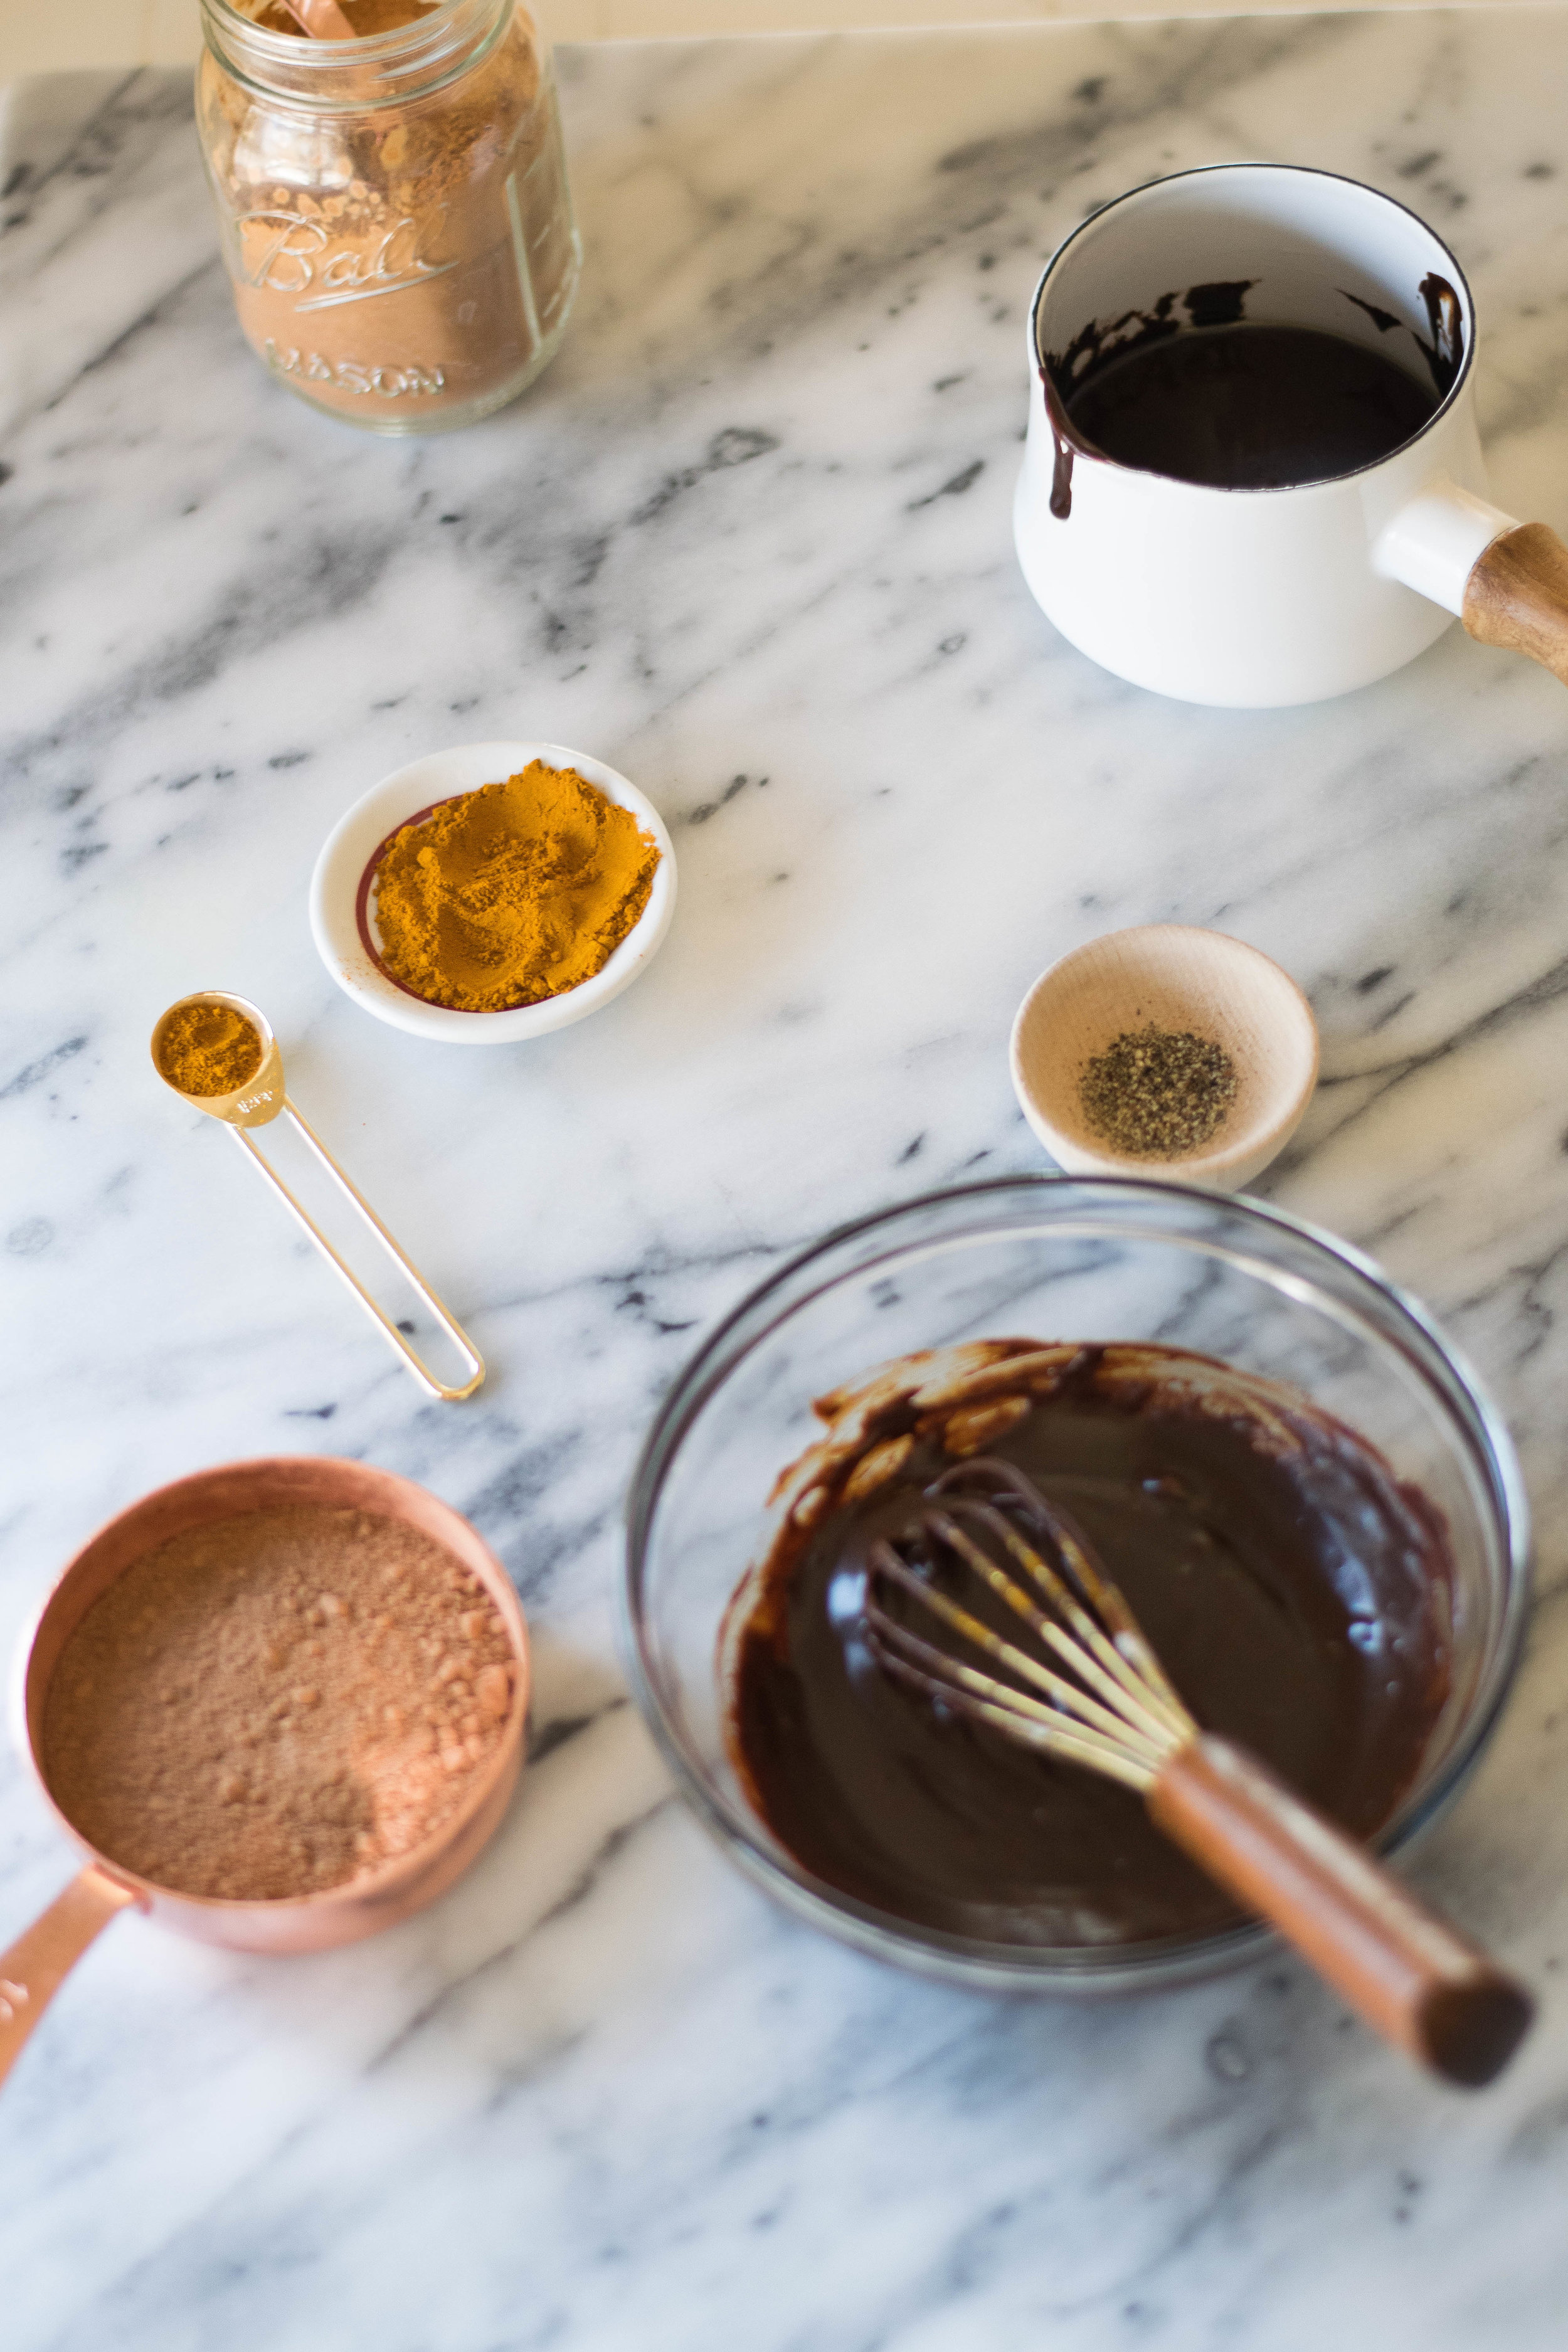 Golden Milk Chocolate Crunch Cups | All Purpose Flour Child